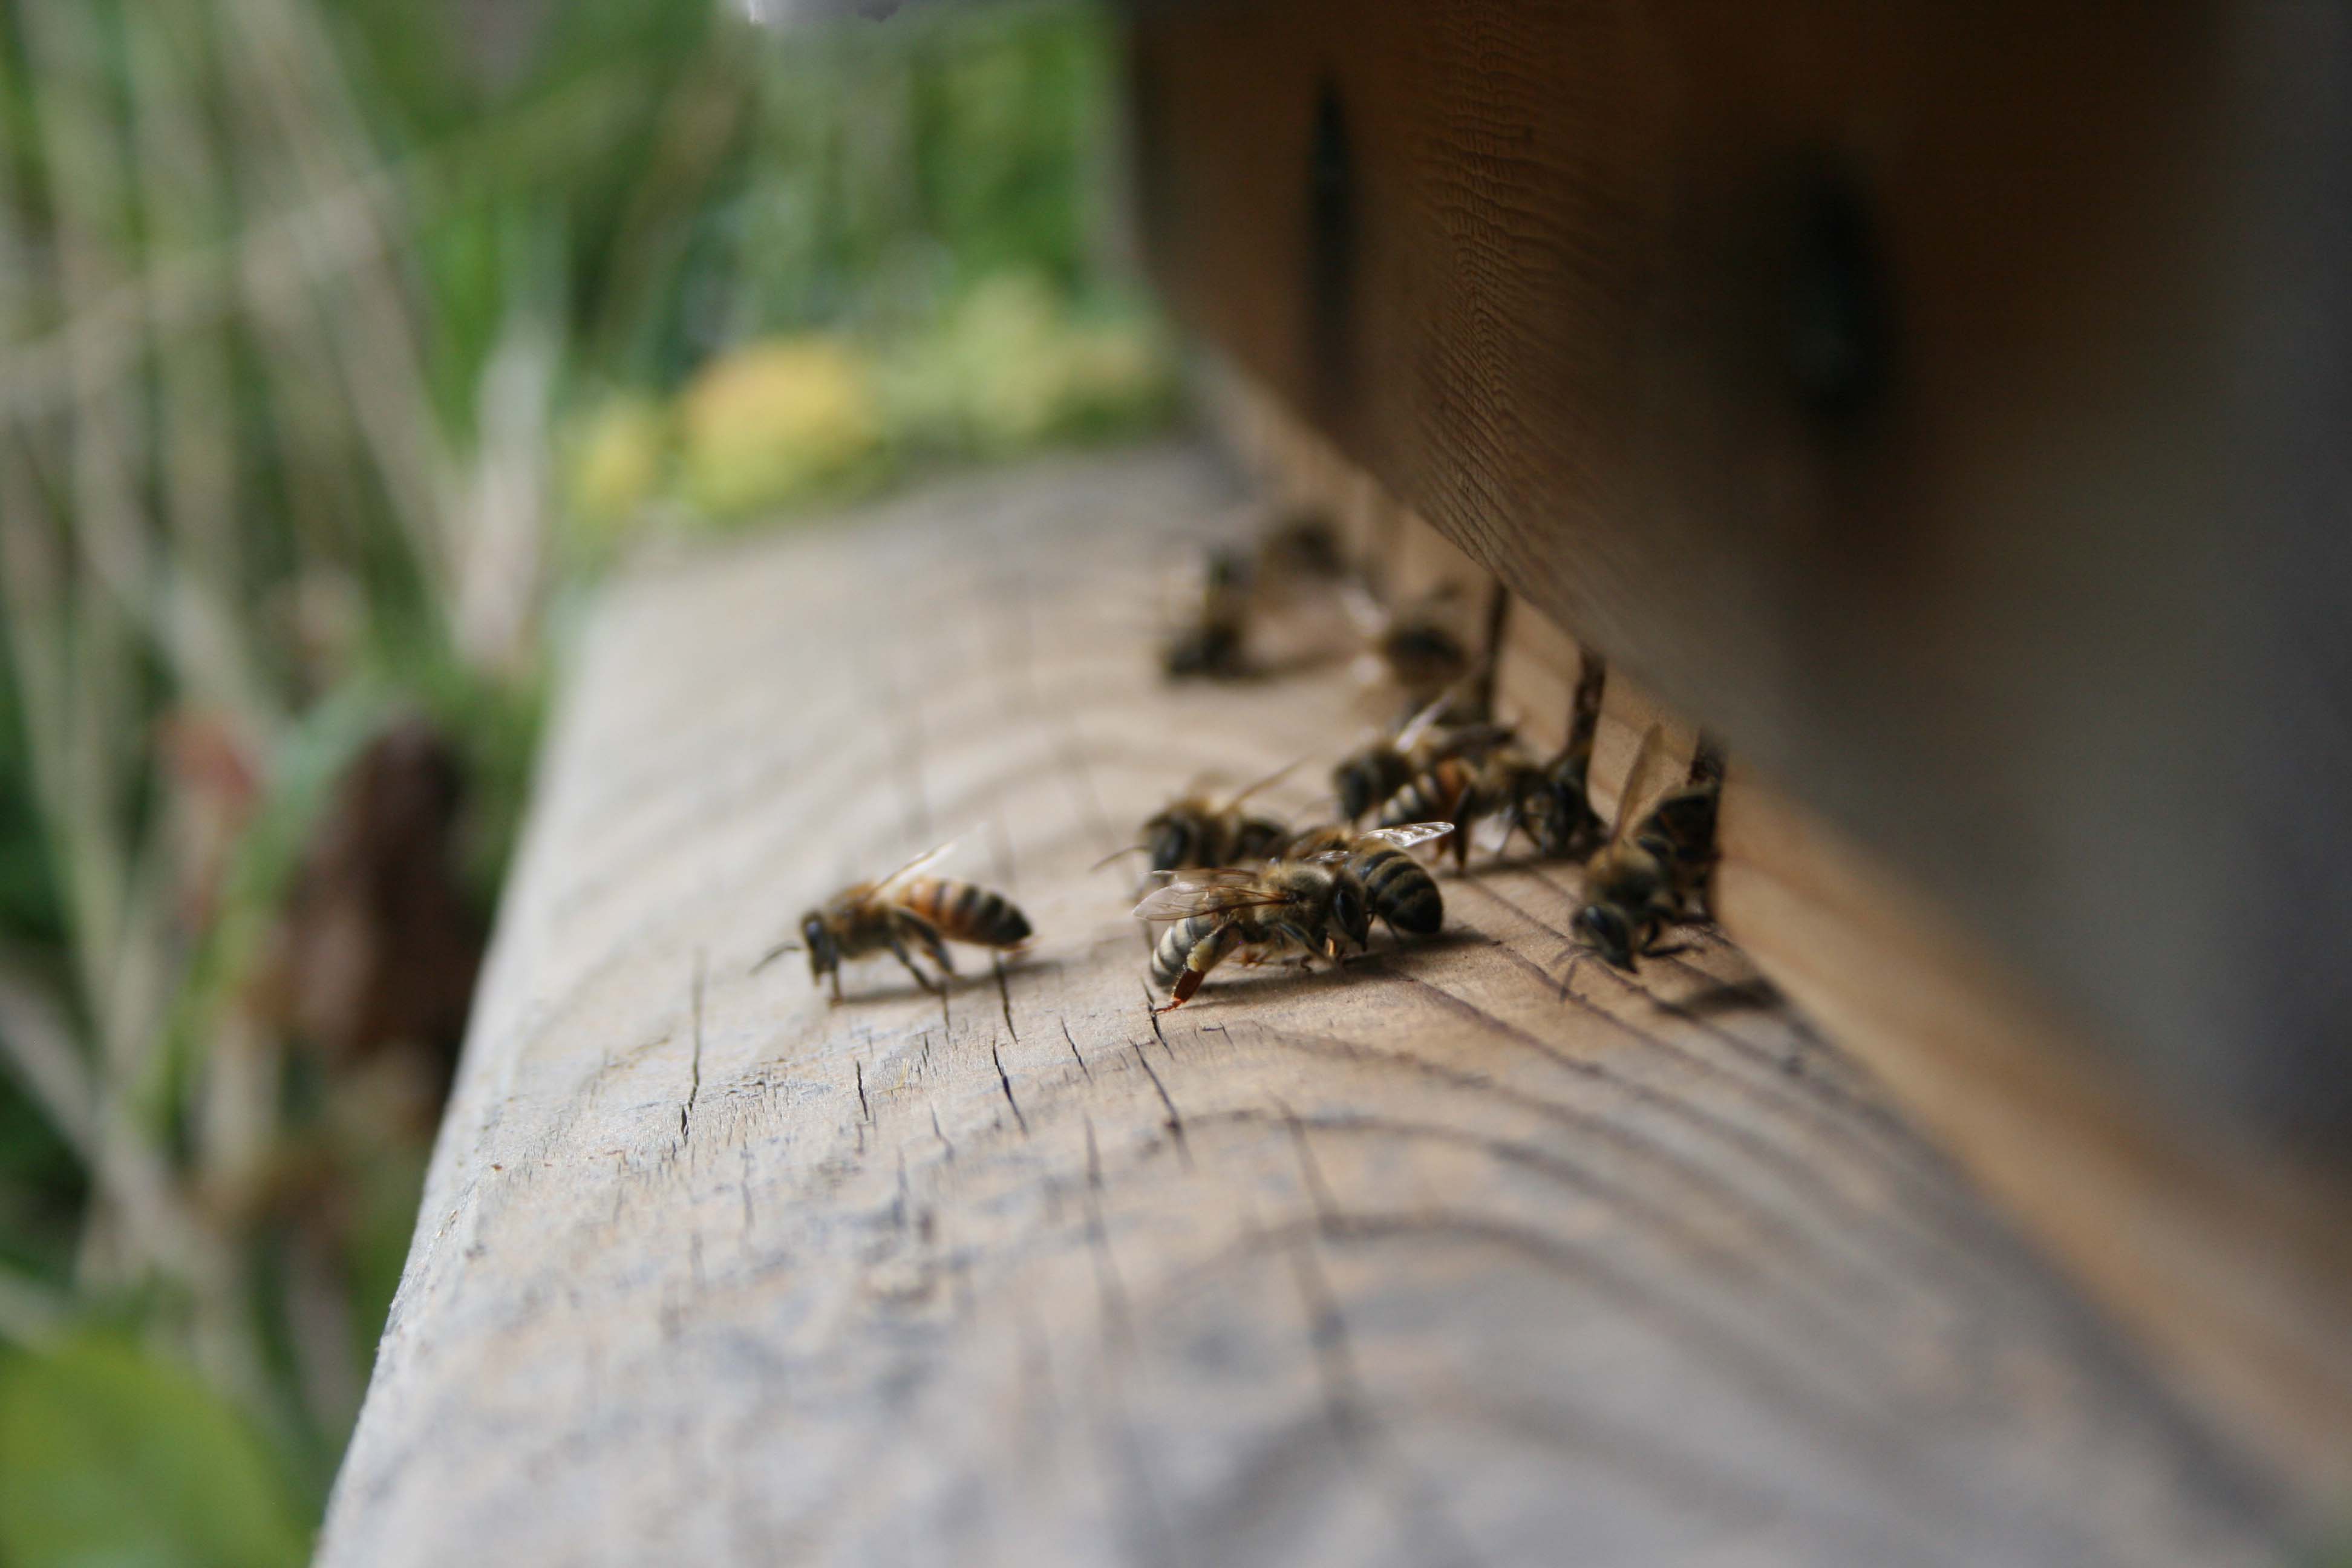 wasps-attacking-bees 005a_0.jpg